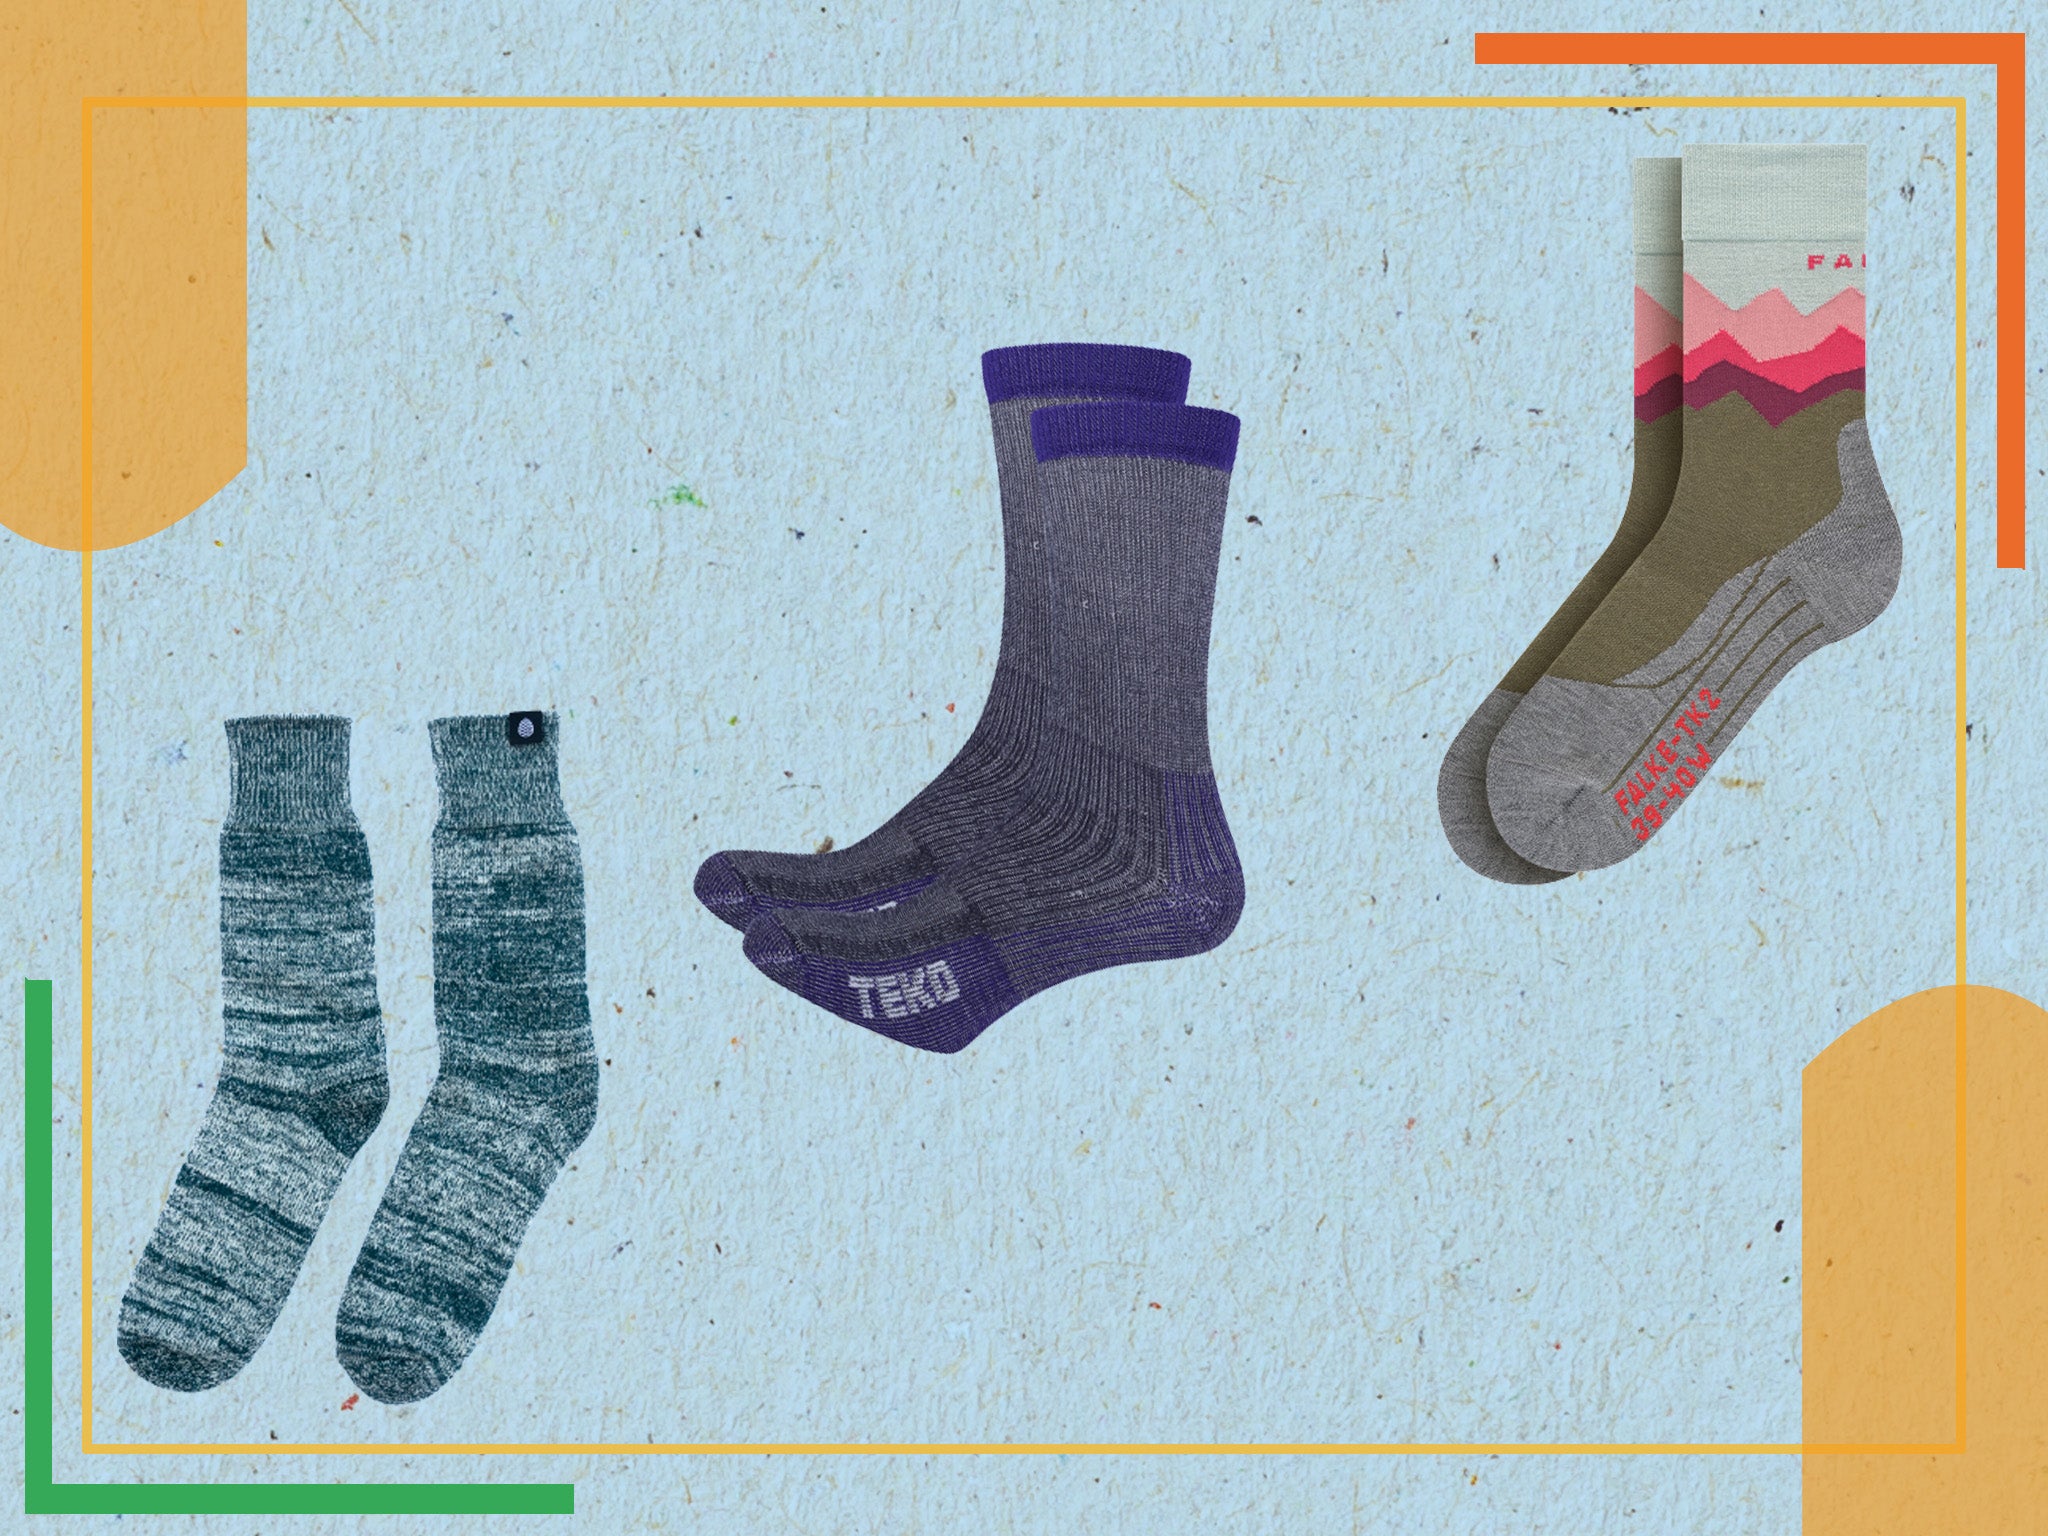 Black Electric Heated Hot Boot Socks Feet Foot Warmer Long Cotton Socks UK 